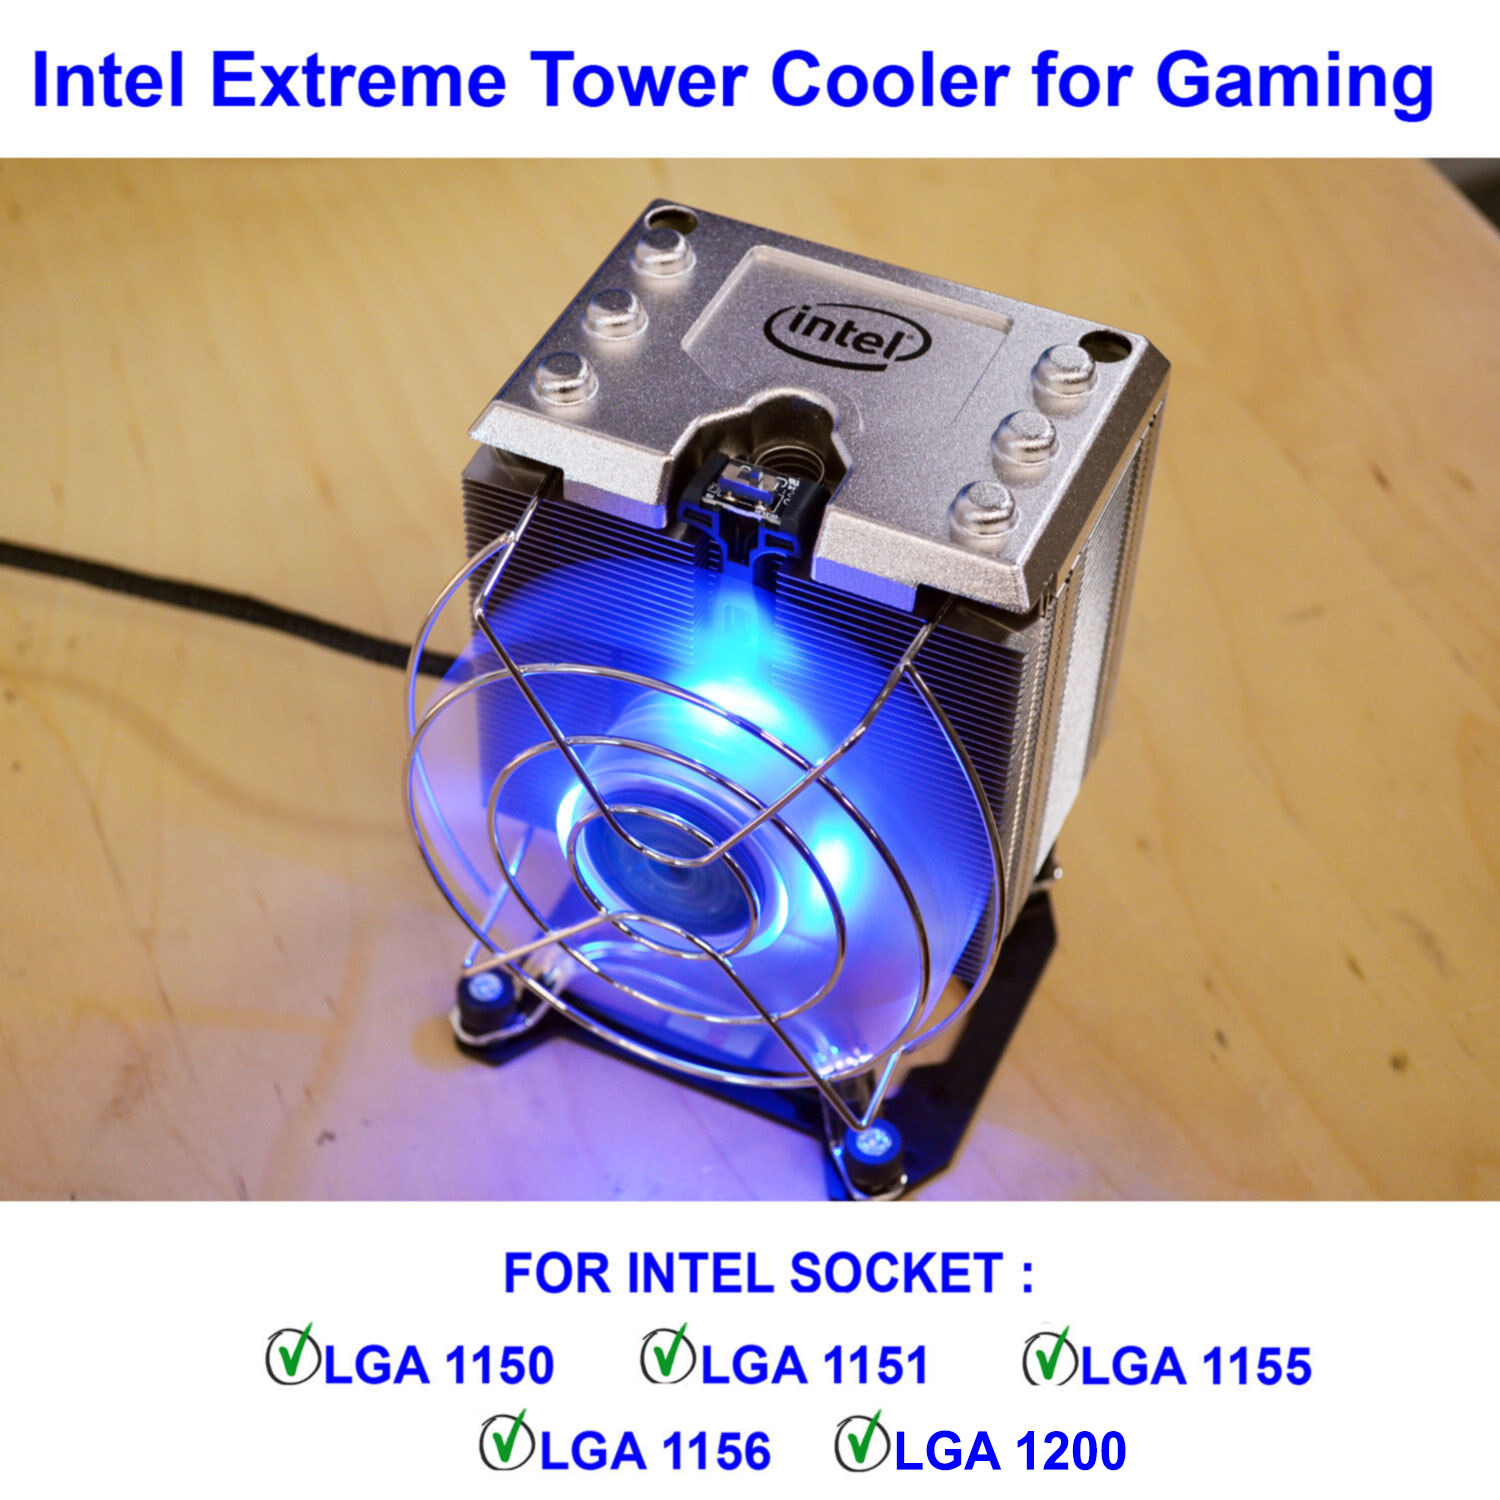 Intel XTS100H Extreme Tower Heatsink Gaming Cooler for LGA 1150,1151,1155,1200